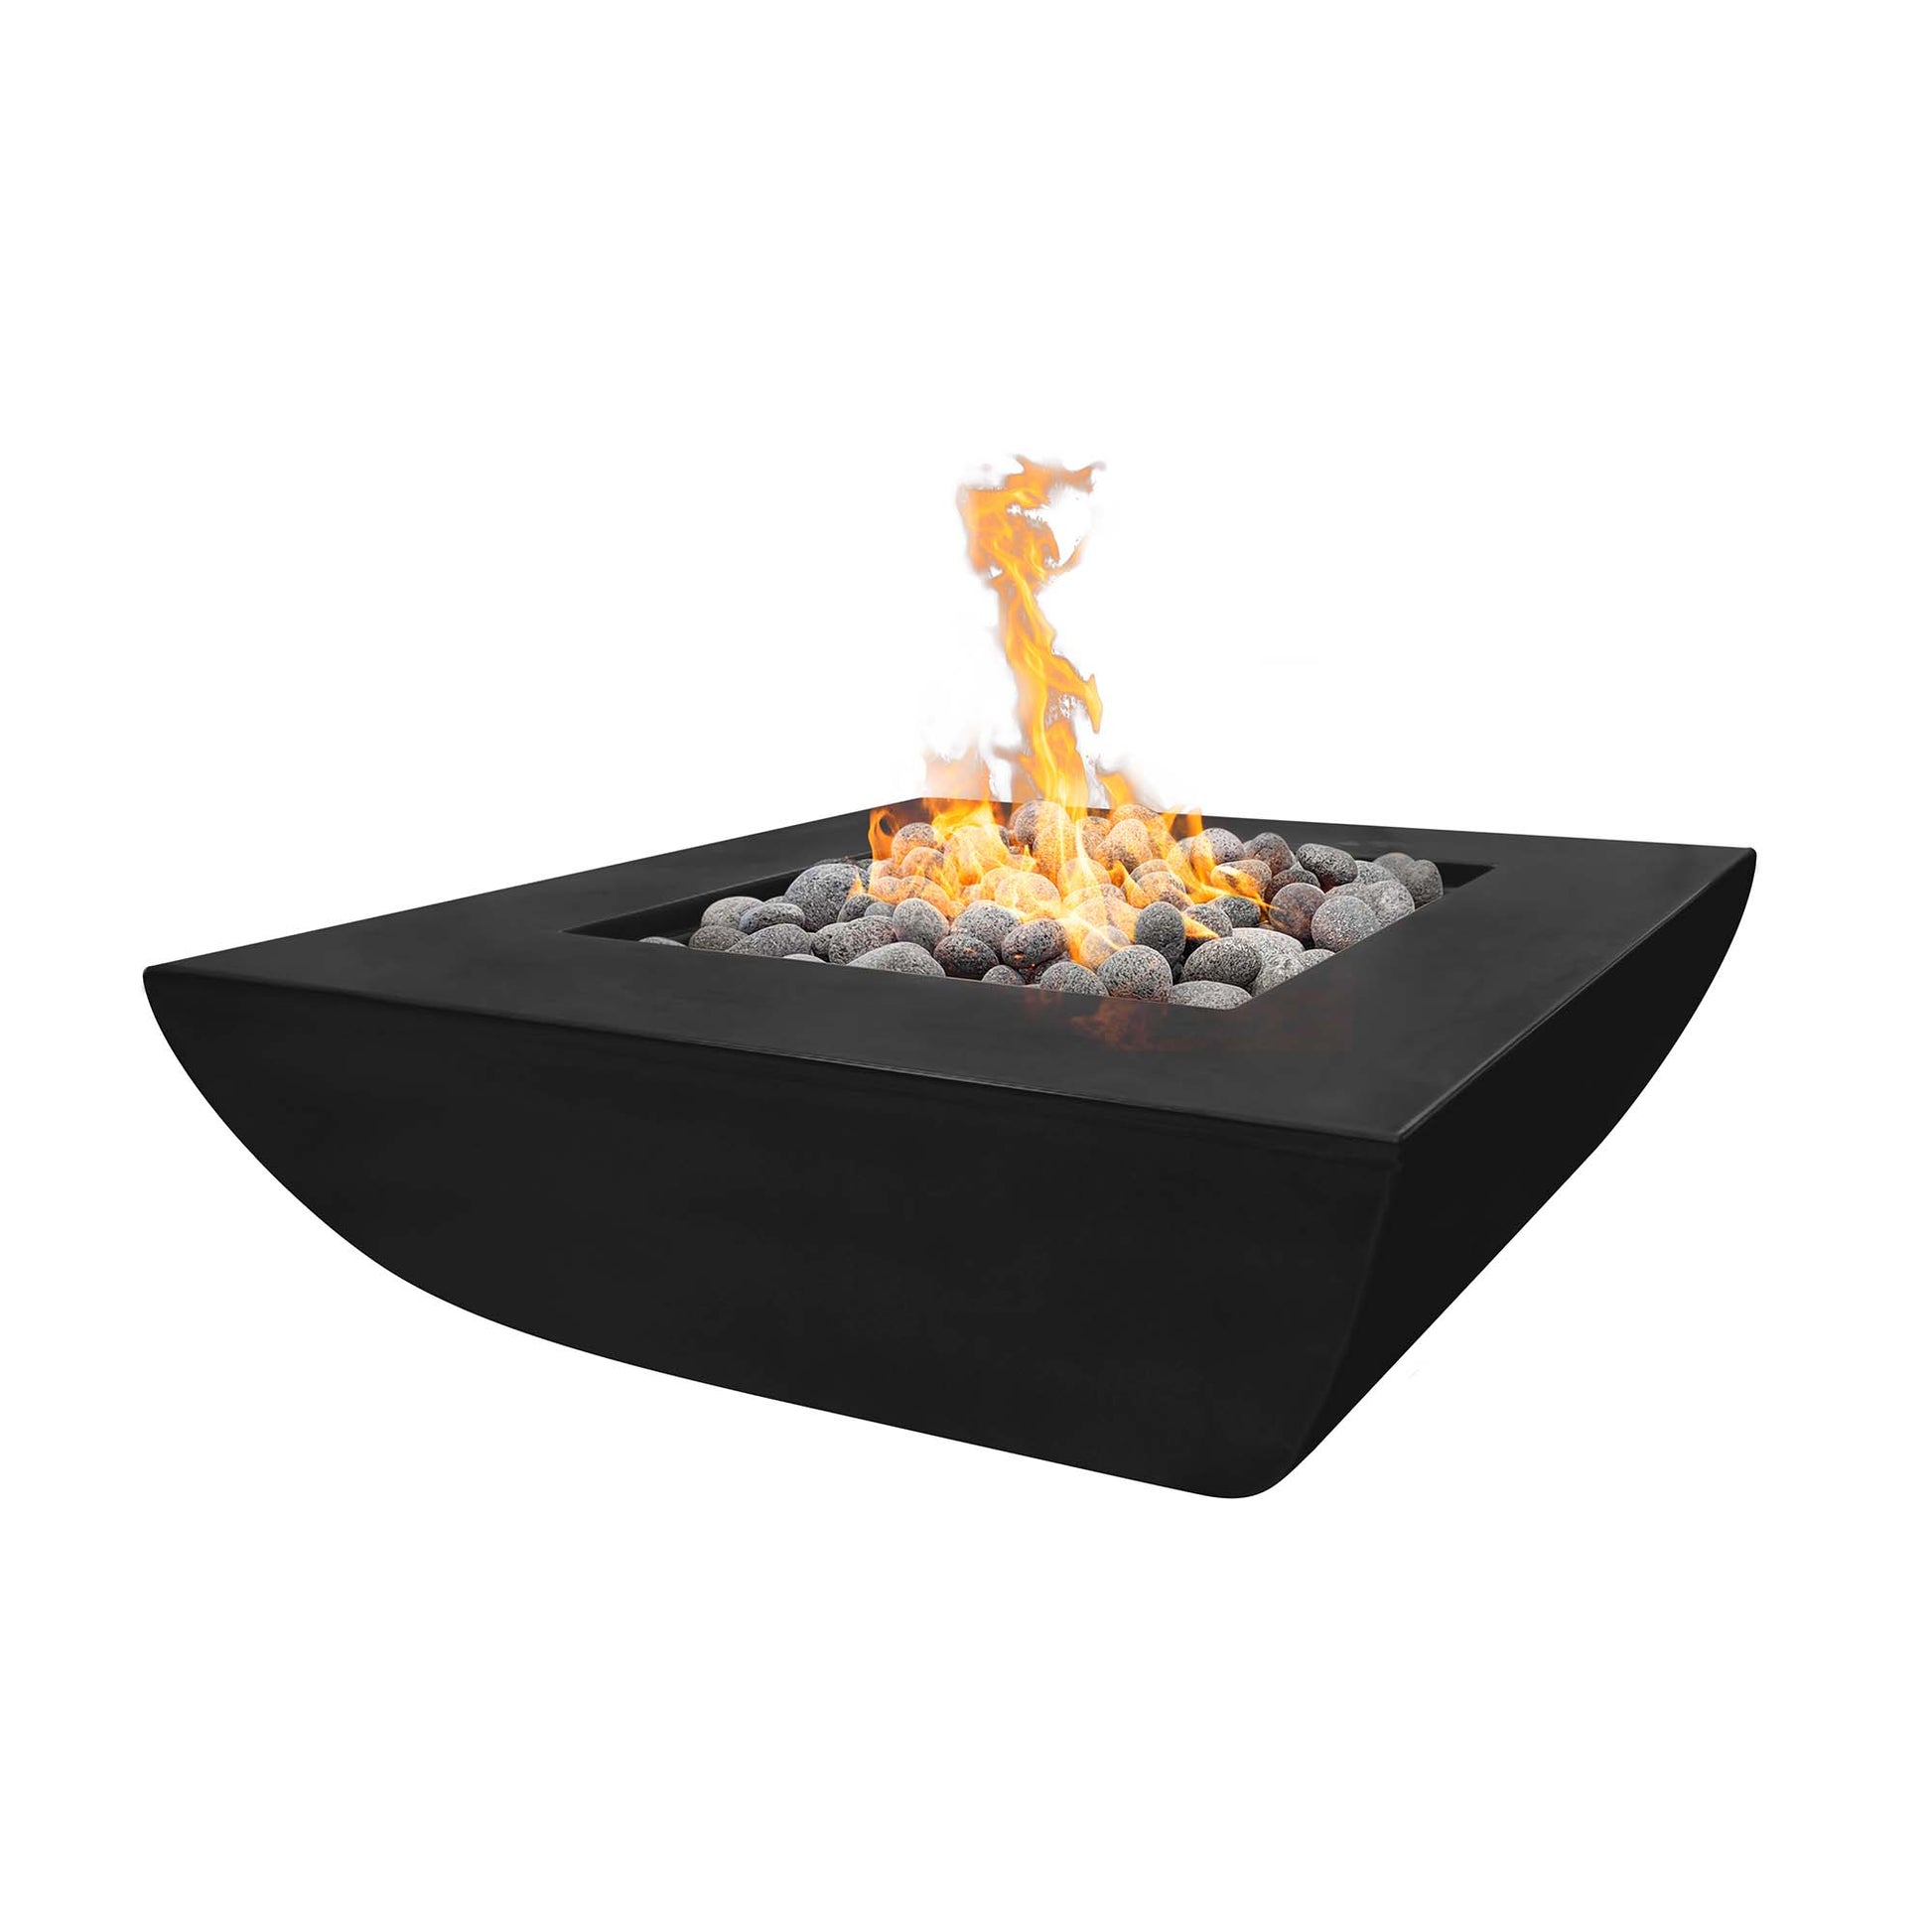 The Outdoor Plus Square Avalon 42" Black GFRC Concrete Liquid Propane Fire Pit with Match Lit with Flame Sense Ignition